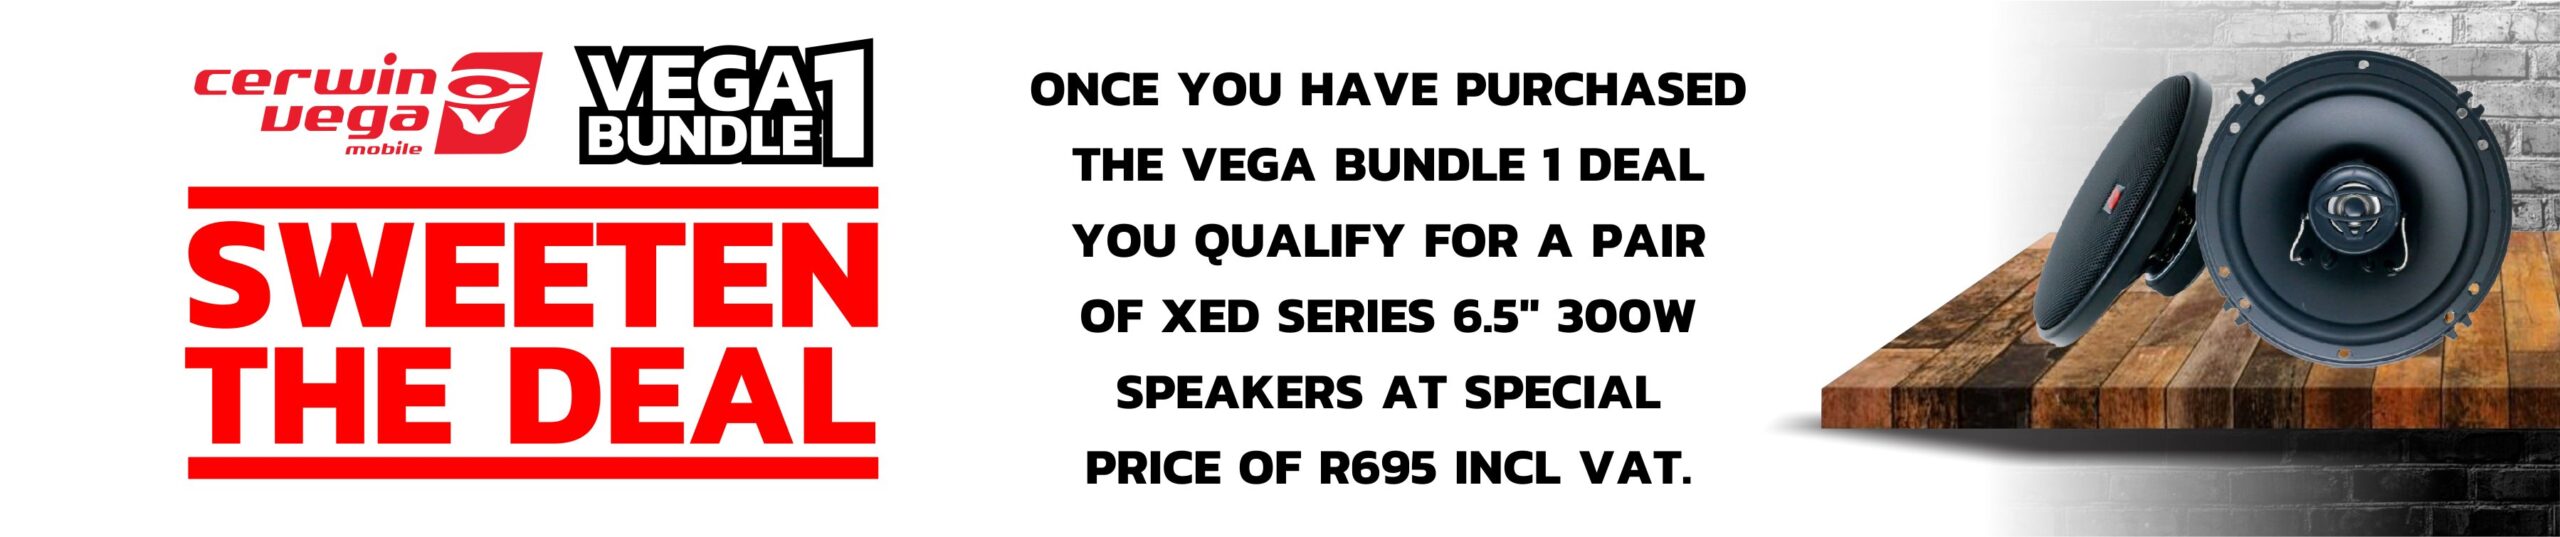 CVM - Vega 1 Bundle banner 2